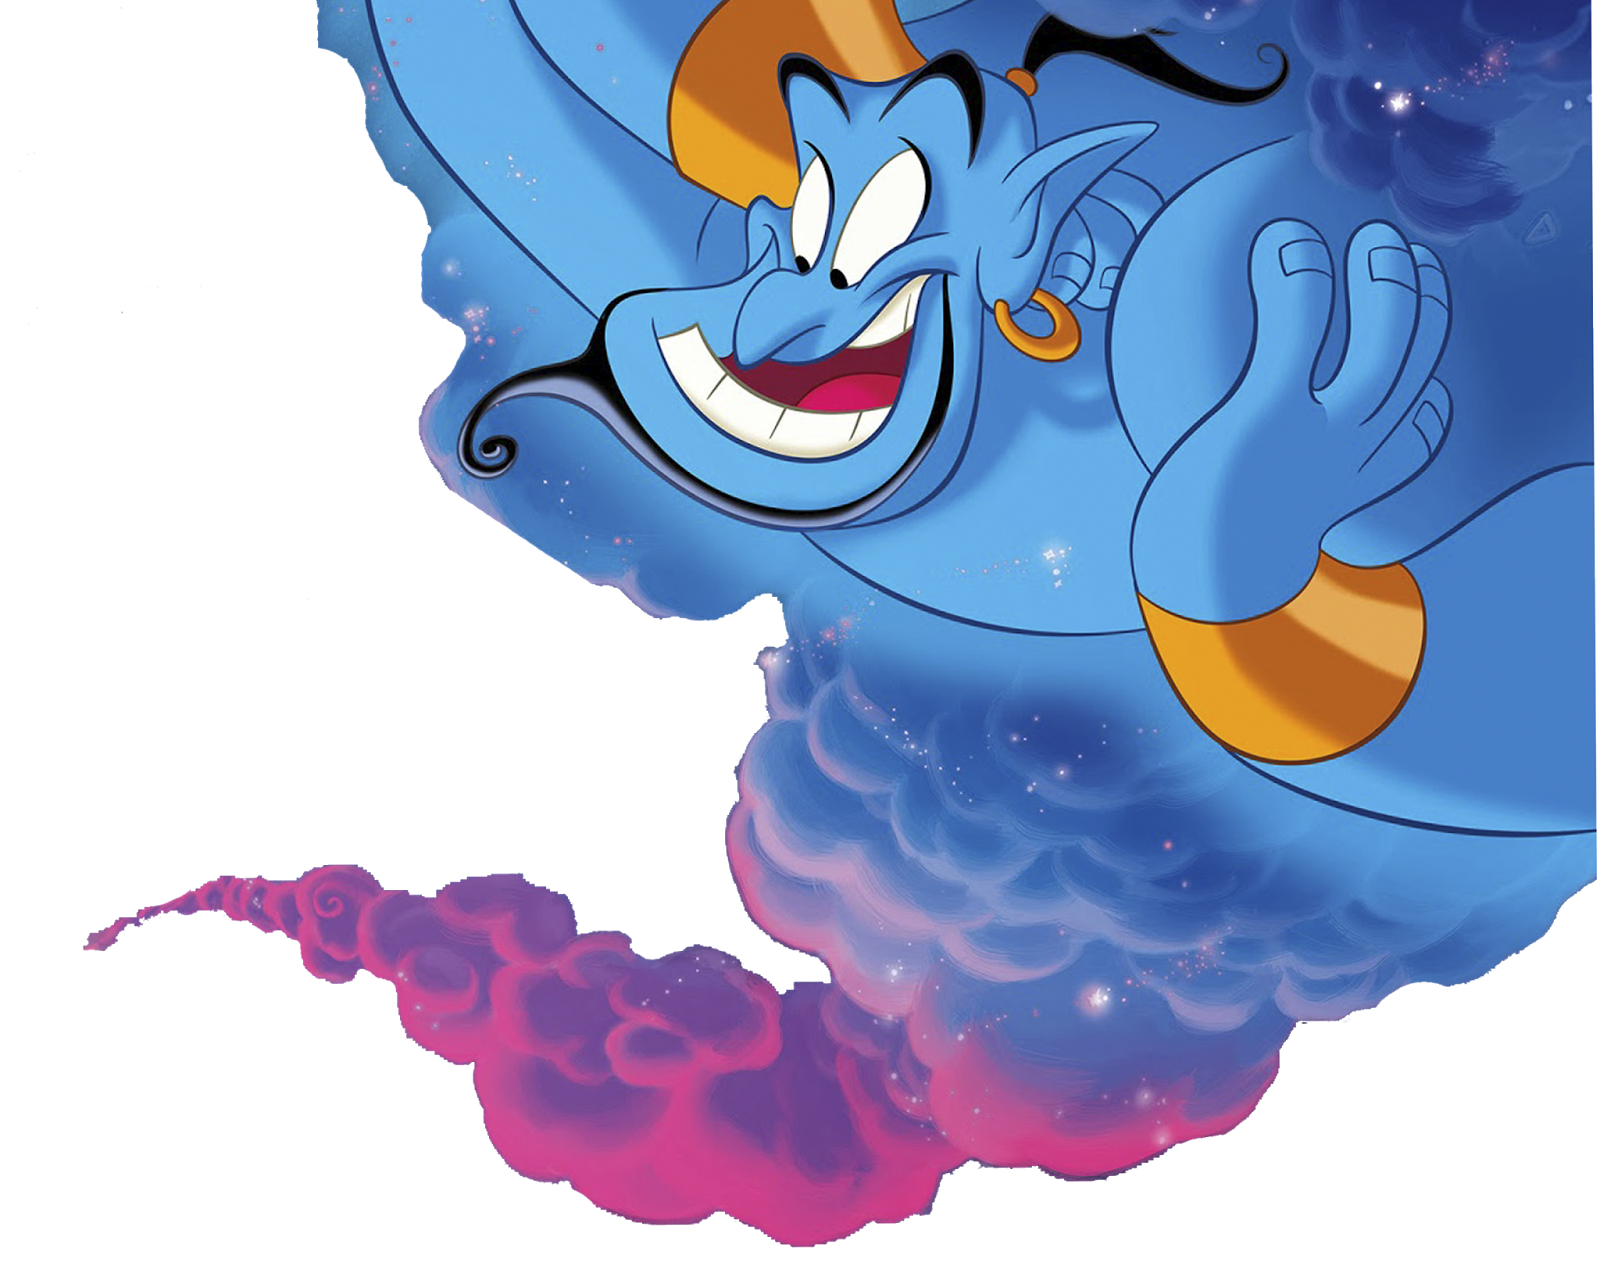 Genie Aladdin Free HQ Image PNG Image